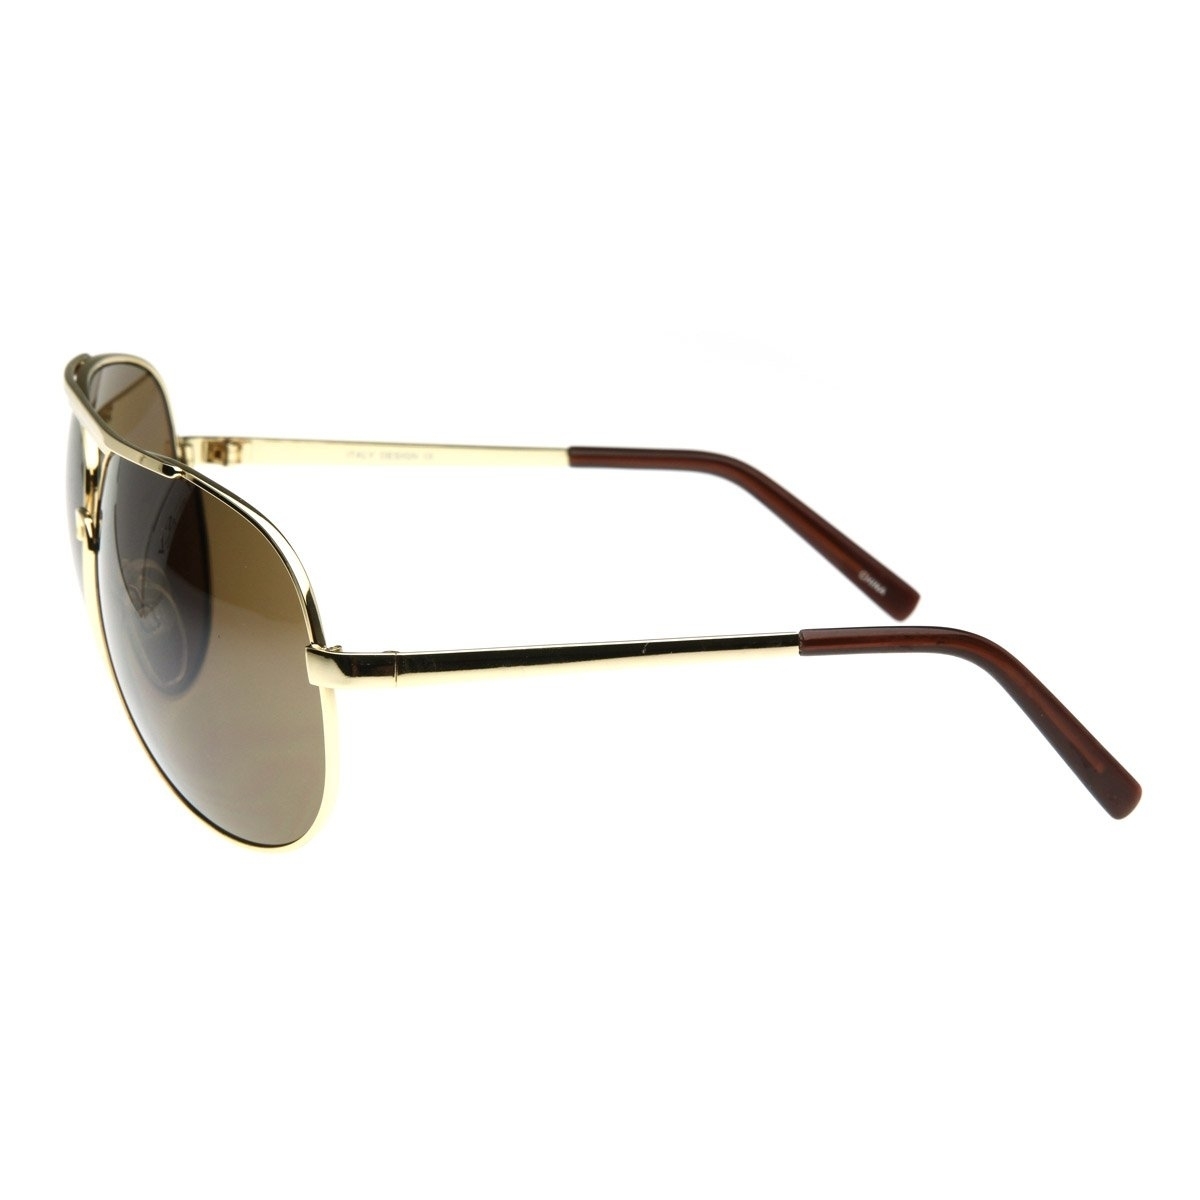 High Quality Full Frame Big X-Large Oversized Metal Aviator Sunglasses - Gold